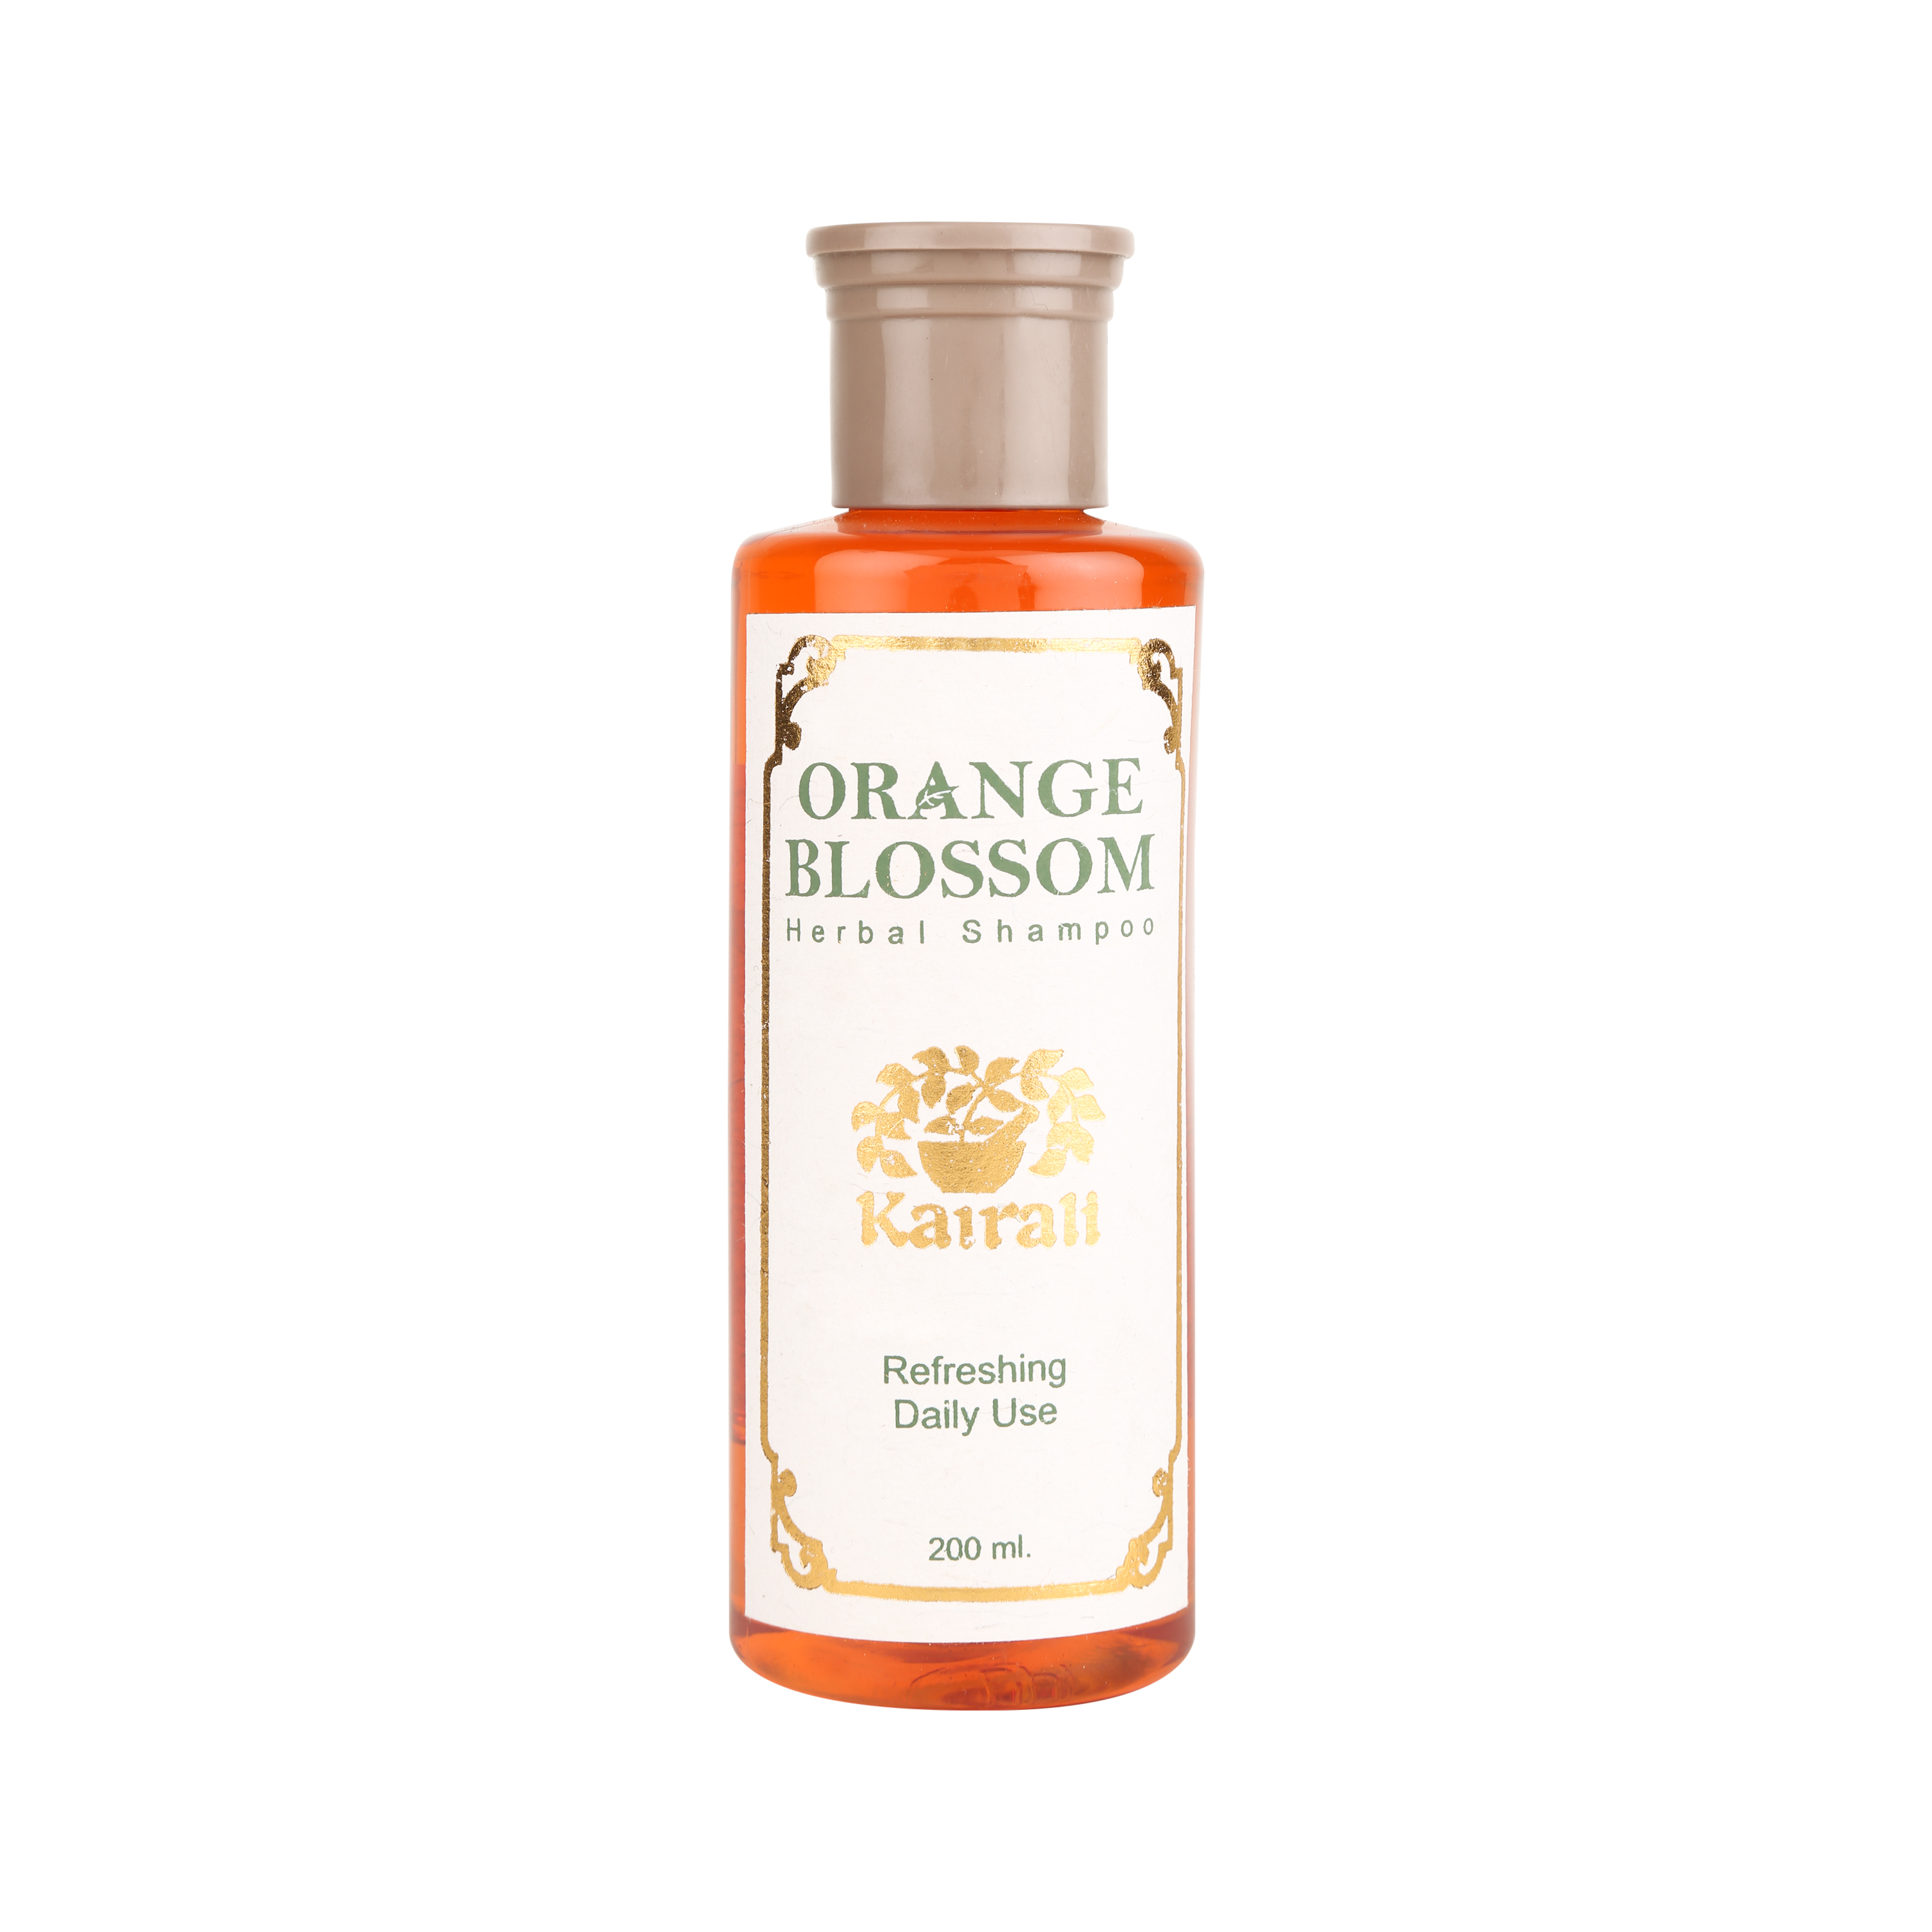 Buy Kairali Orange Blossom Shampoo at Best Price Online